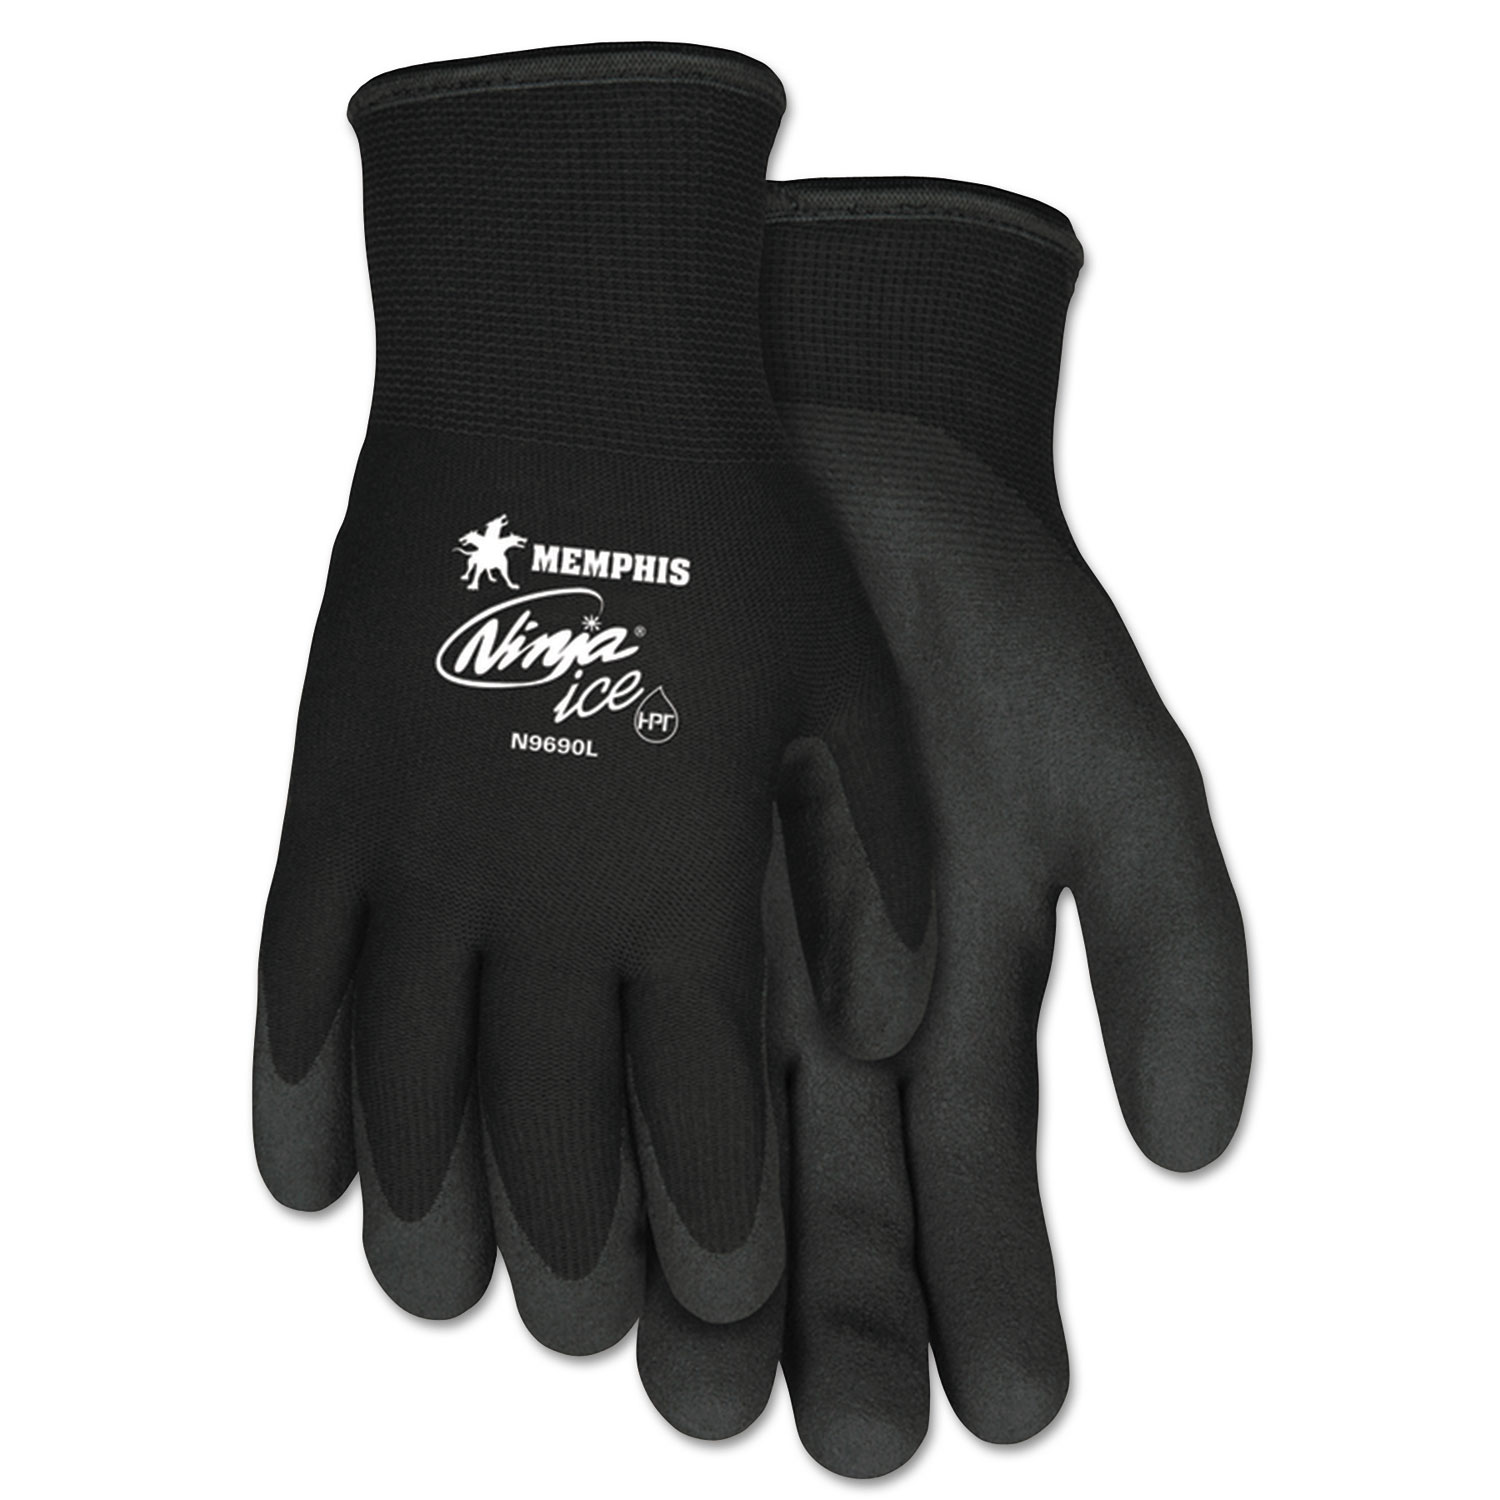  MCR Safety N9690L Ninja Ice Gloves, Black, Large (CRWN9690L) 